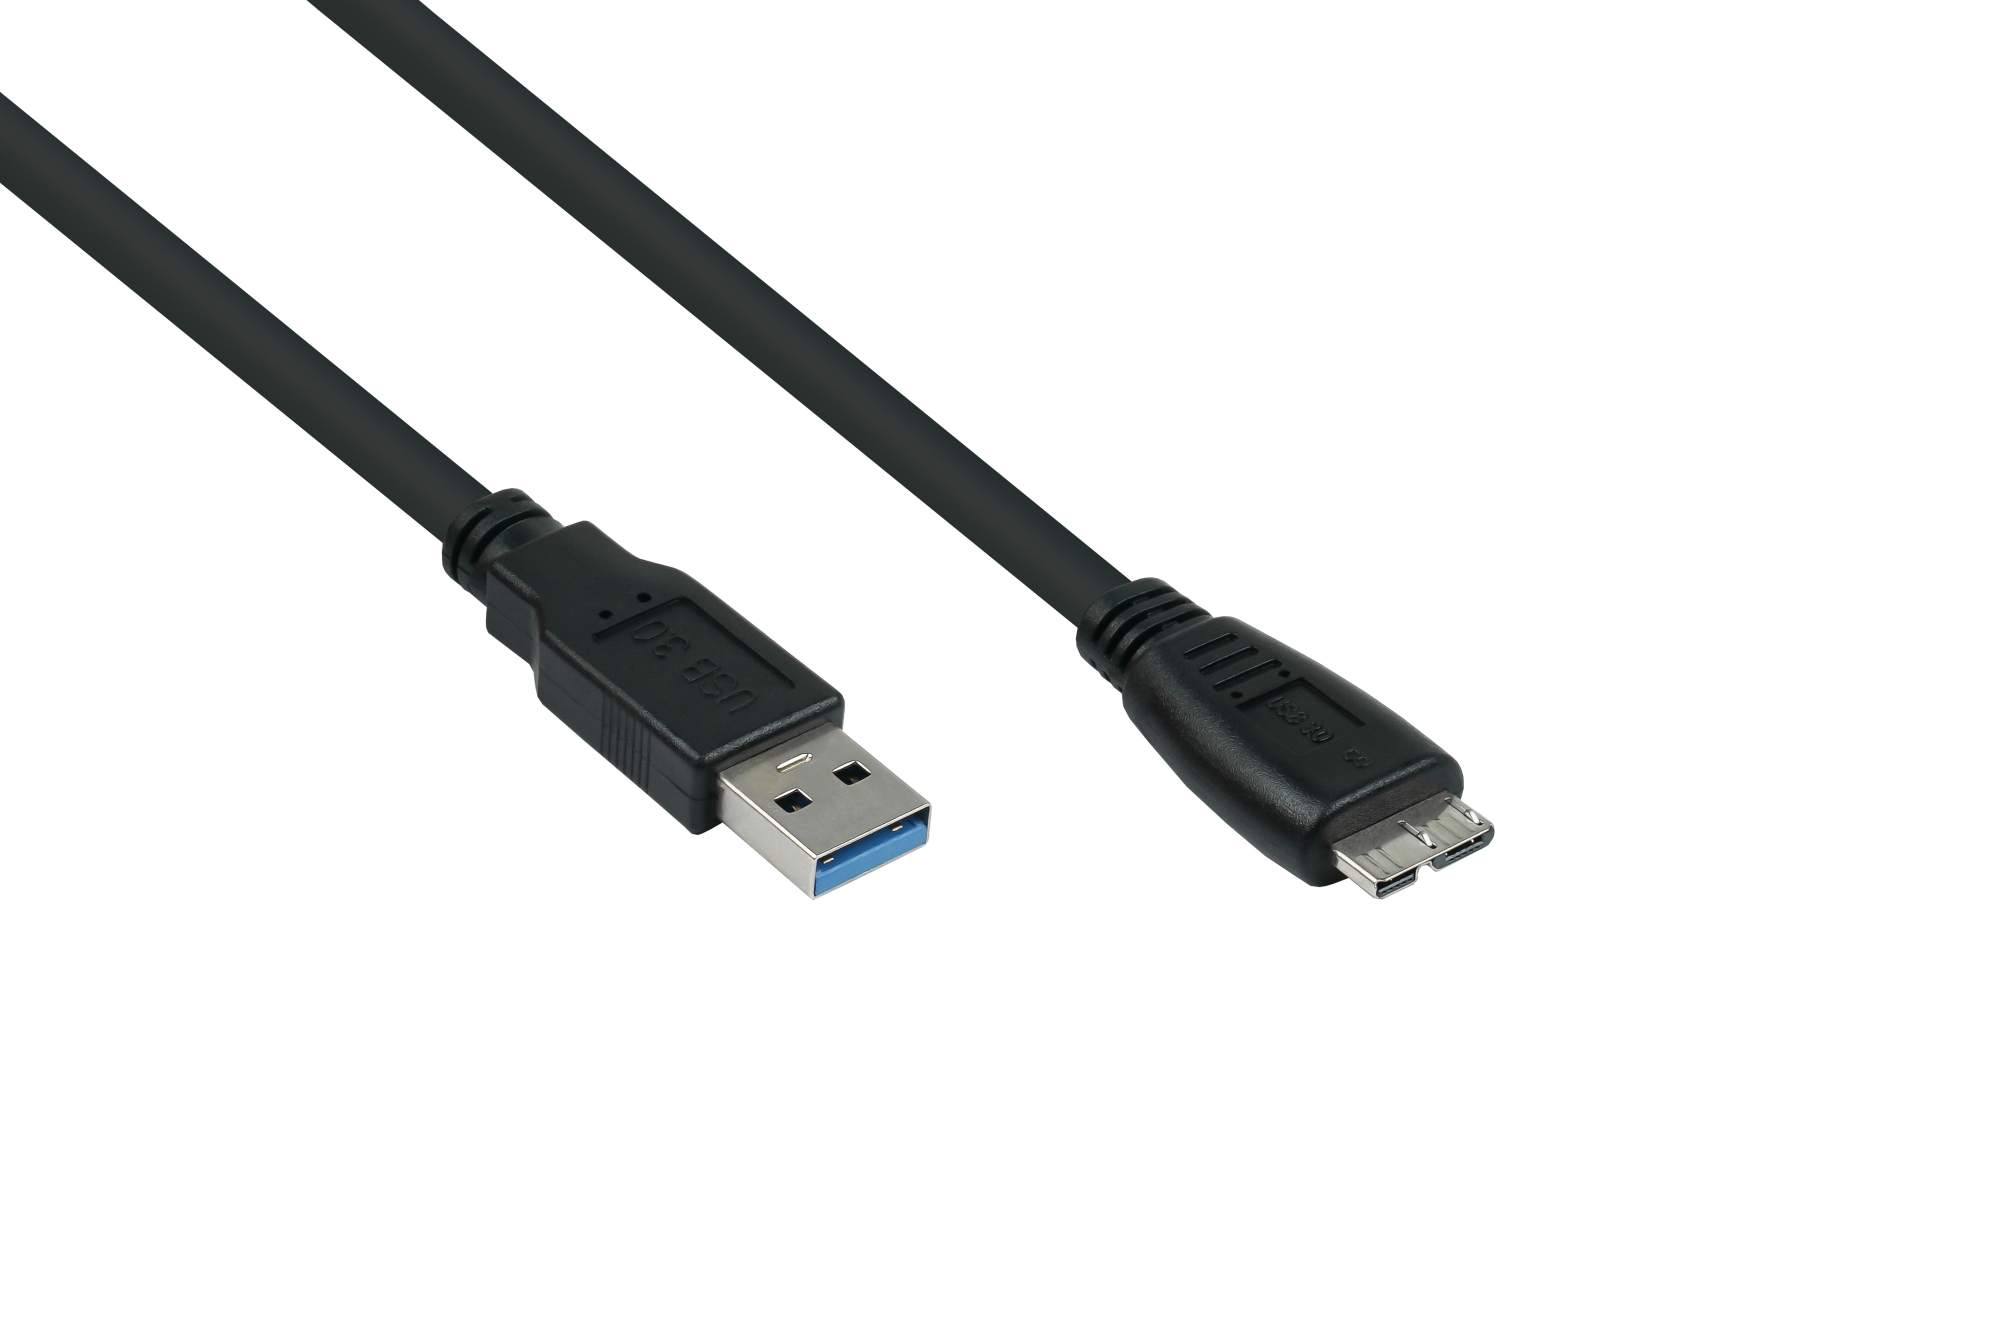 USB 3.0 Kabel Stecker A an Stecker Micro B, Premium, AWG28 / AWG24, UL, KUPFER, schwarz, 3m